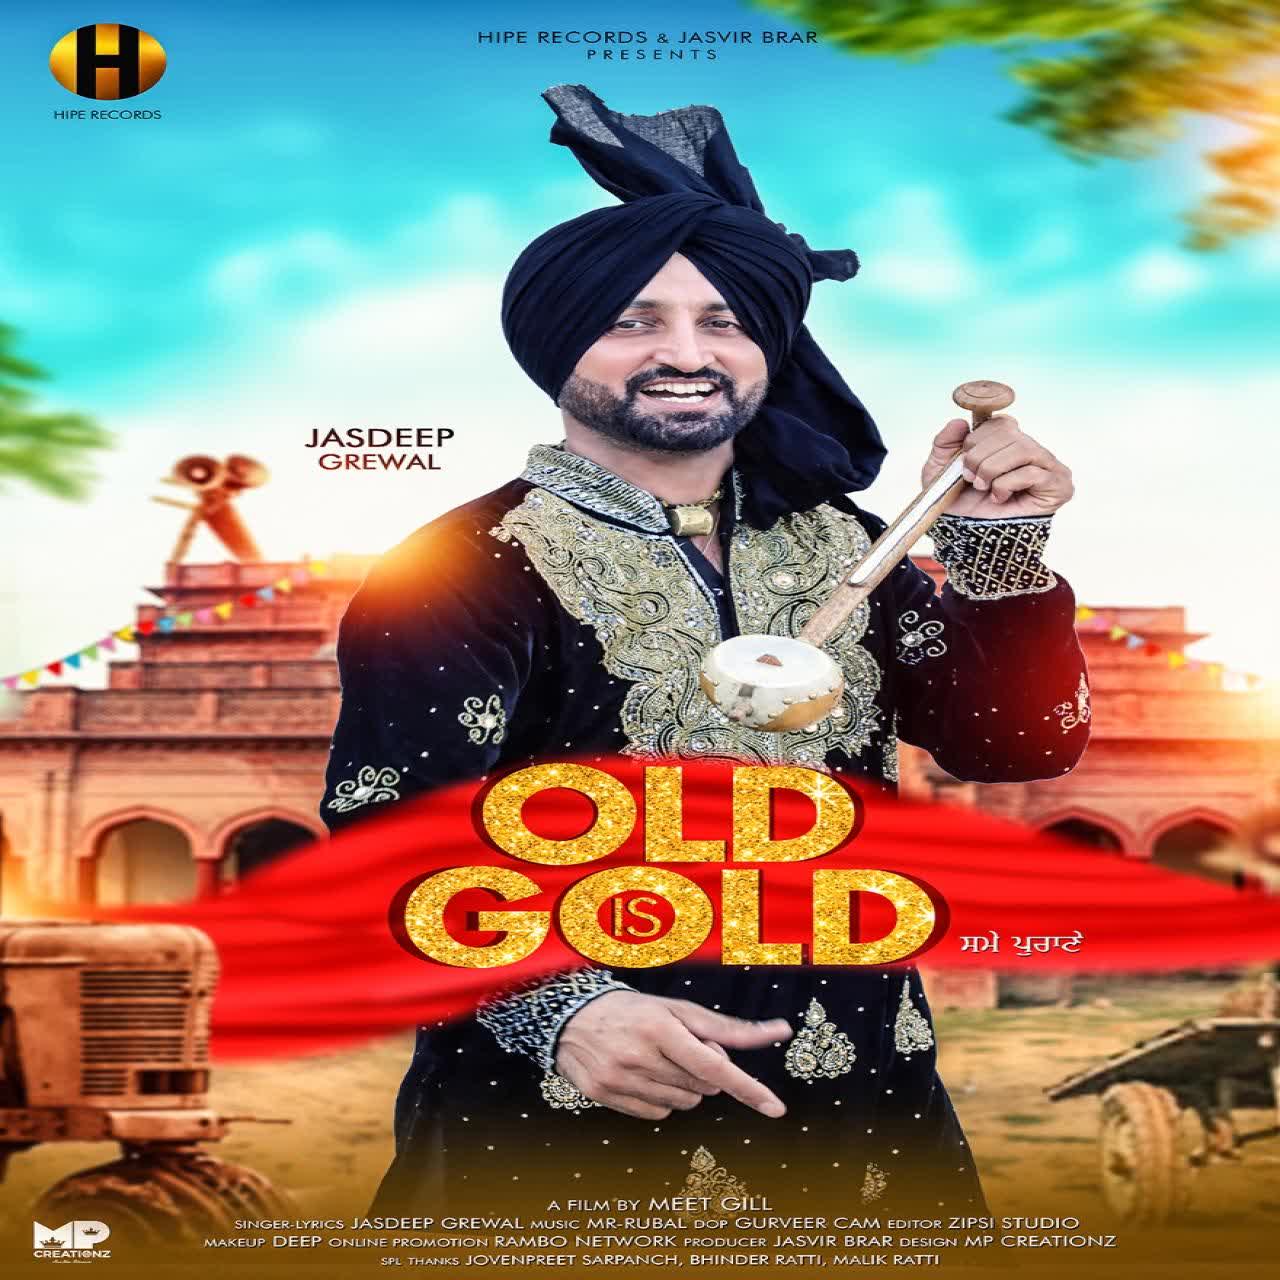 Old Is Gold Jasdeep Grewal mp3 song